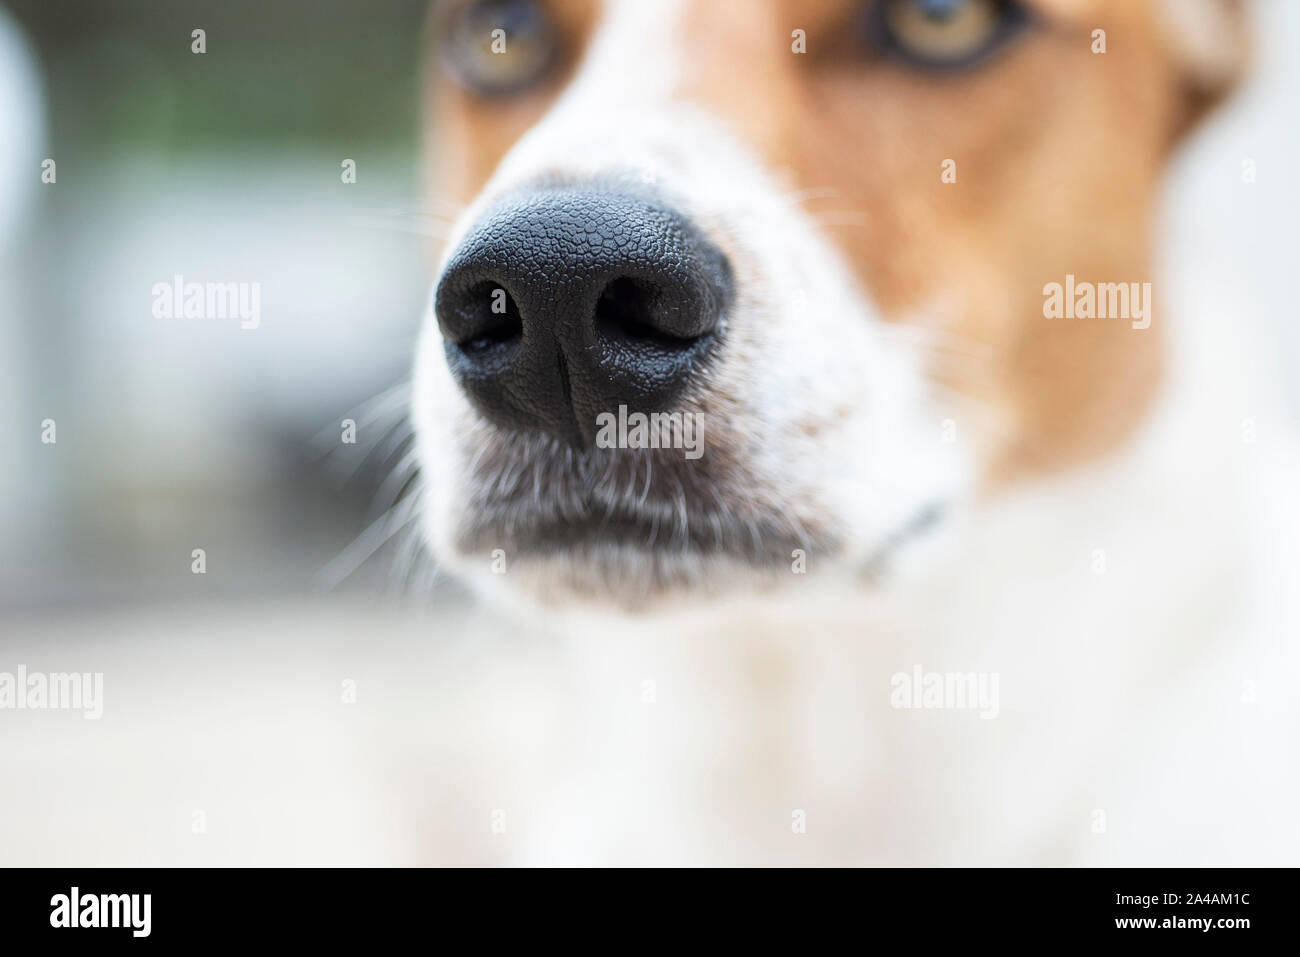 Close up of dog's nose Stock Photo